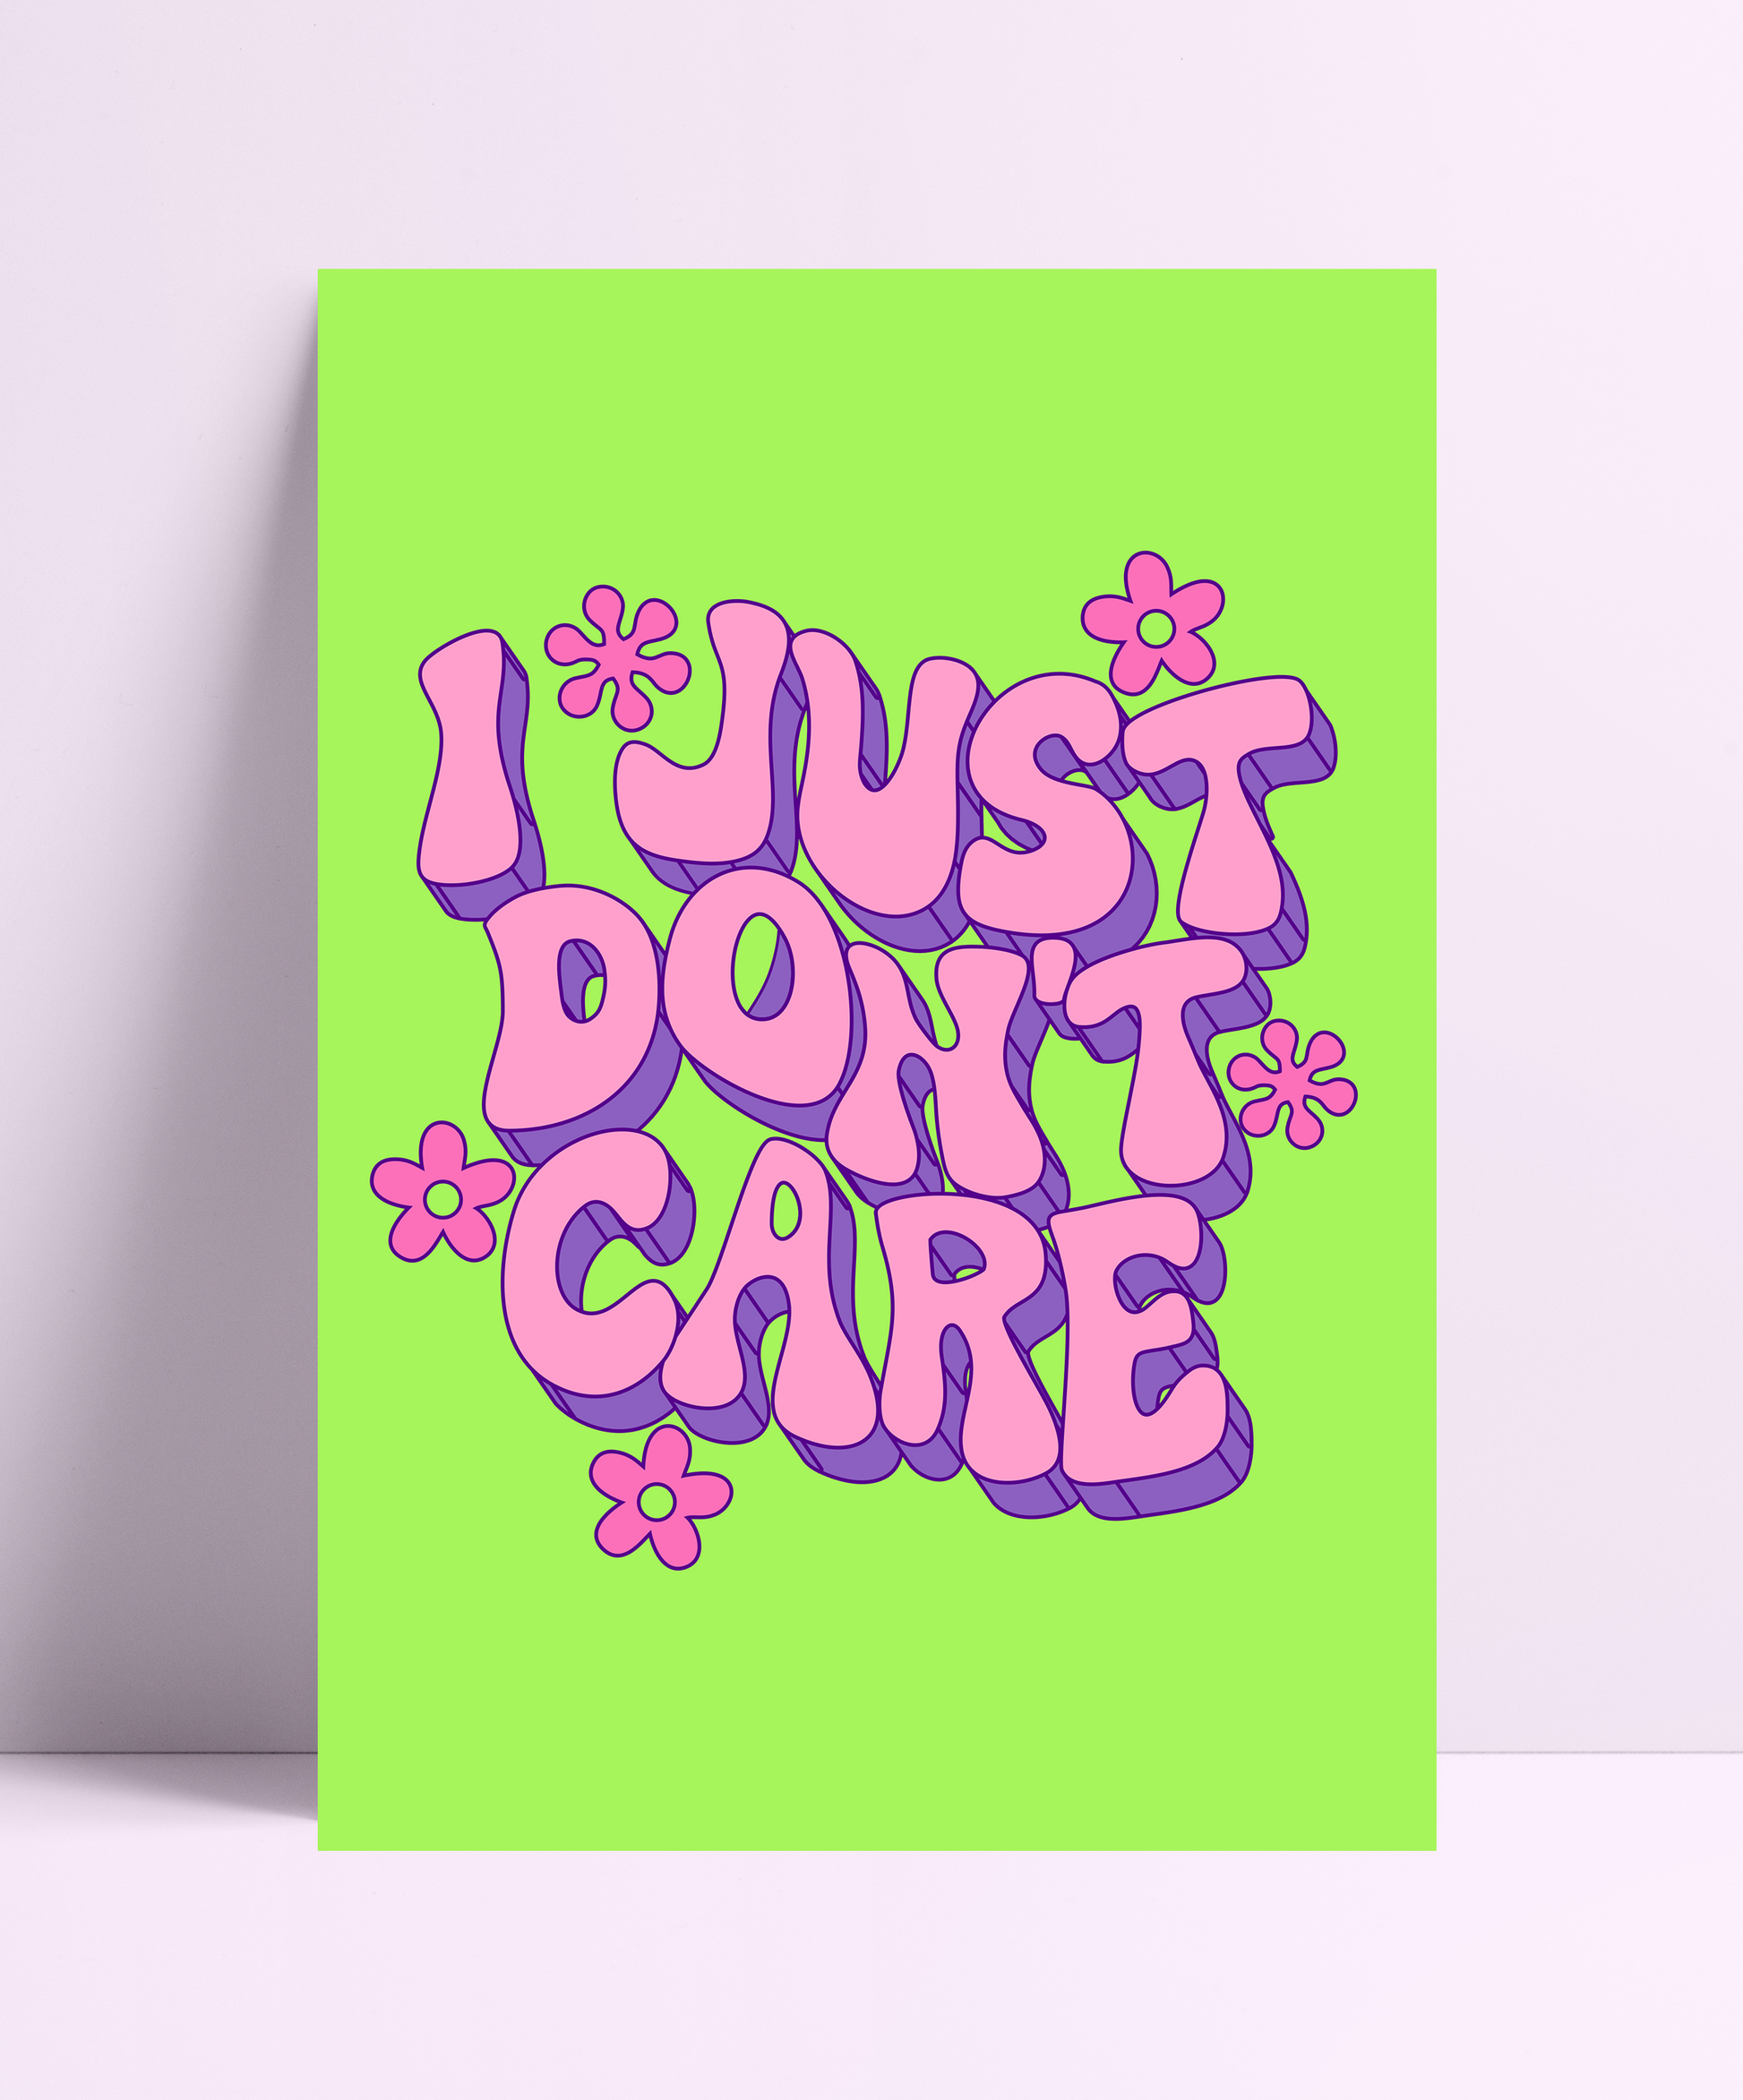 I Just Don't Care Wall Print - PrintedWeird